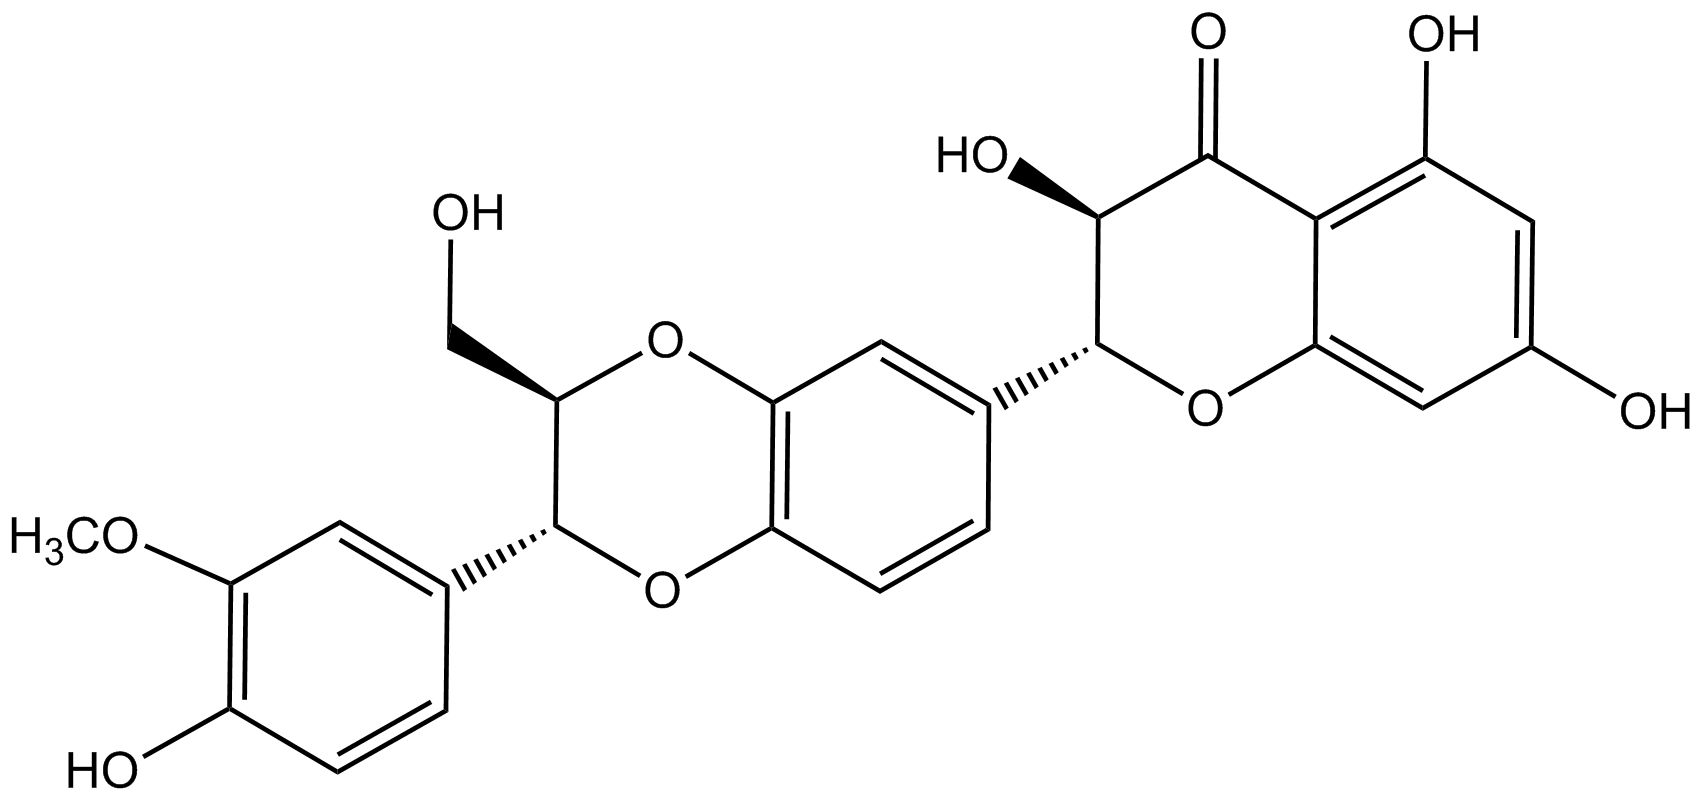 Isosilibinin A phyproof® Referenzsubstanz | PhytoLab